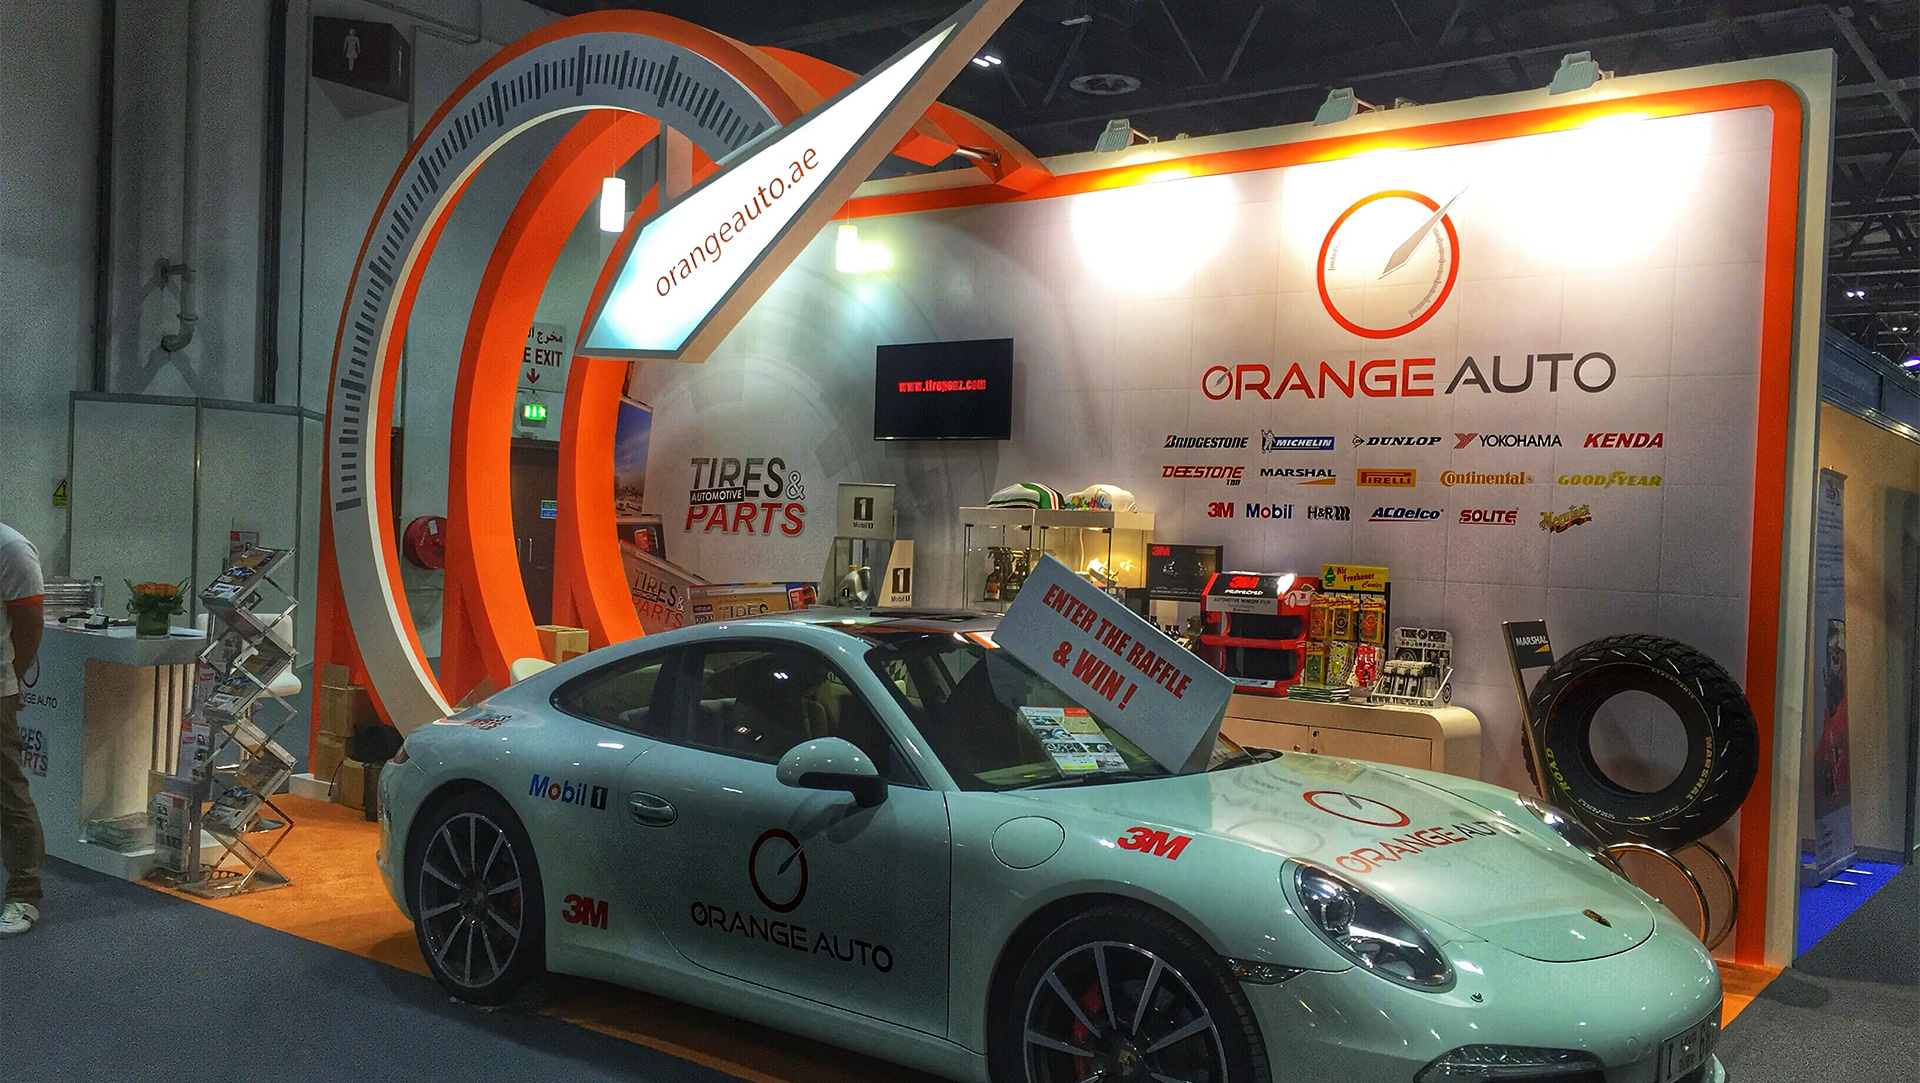 Orange Auto white Porsche at exhibition